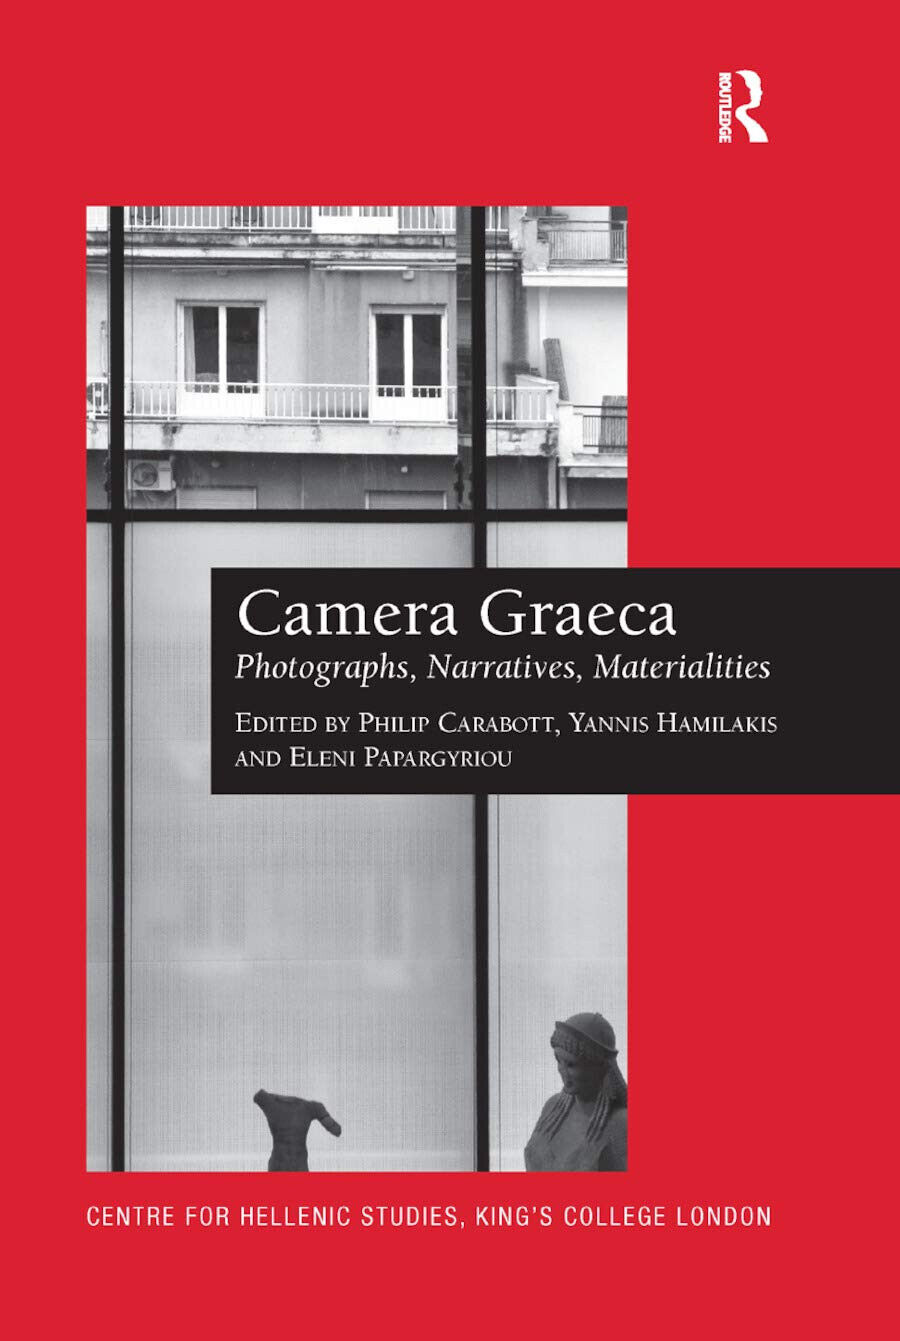 Camera Graeca: Photographs, Narratives, Materialities - Philip Carabott - 2019